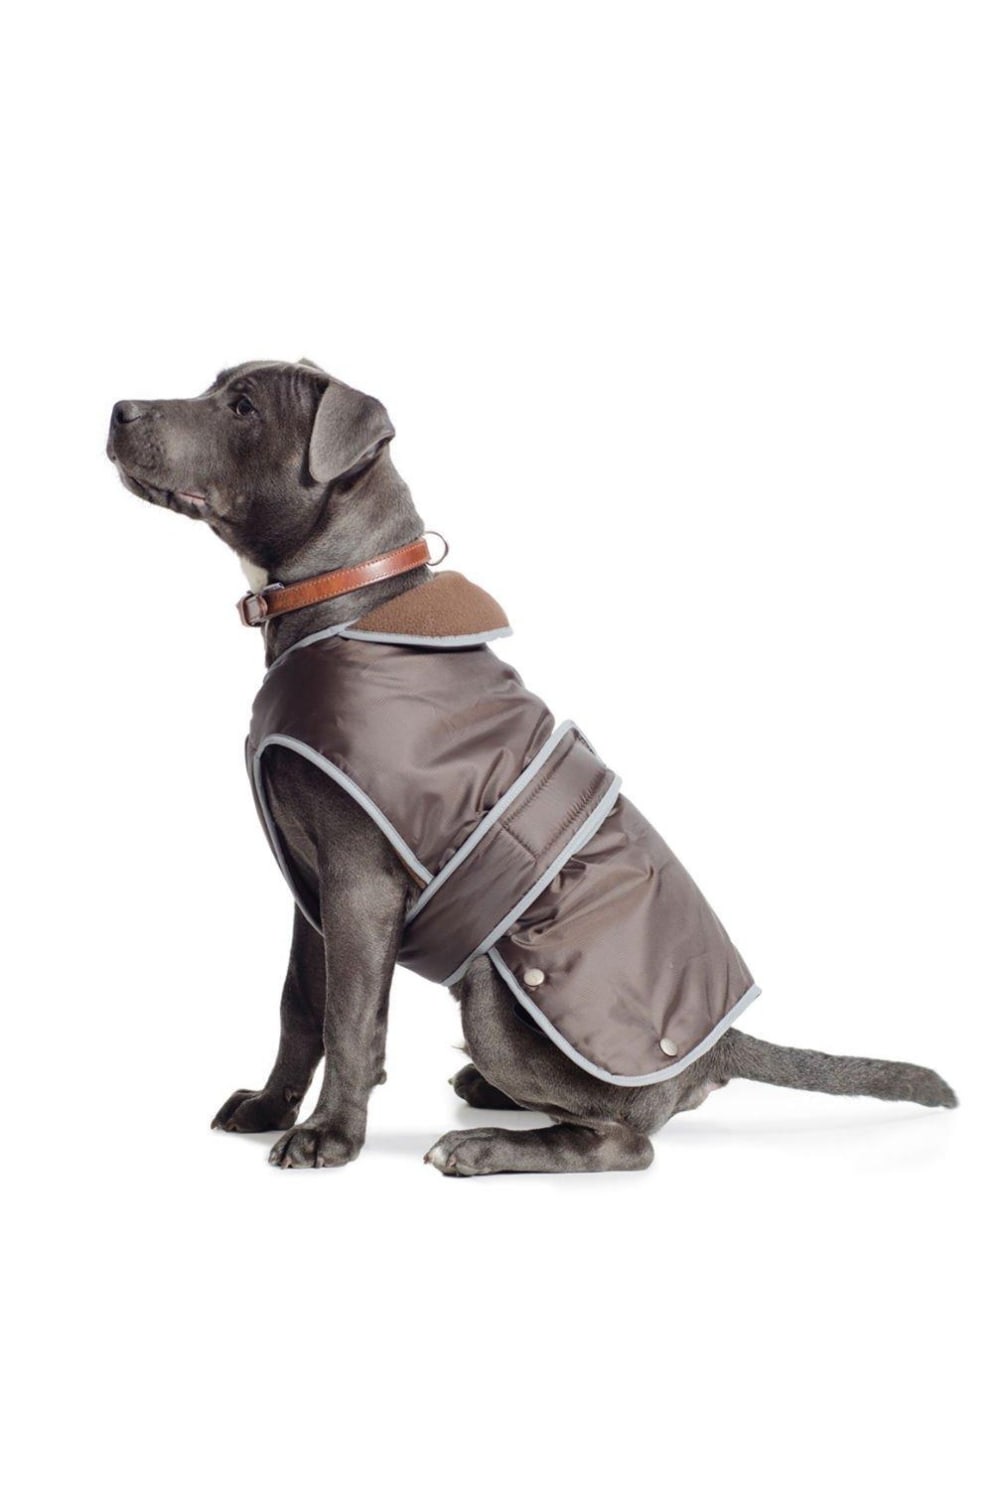 Ancol Pet Products Muddy Paws Stormguard Reflective Dog Coat (Extra Large) (Extra Large)